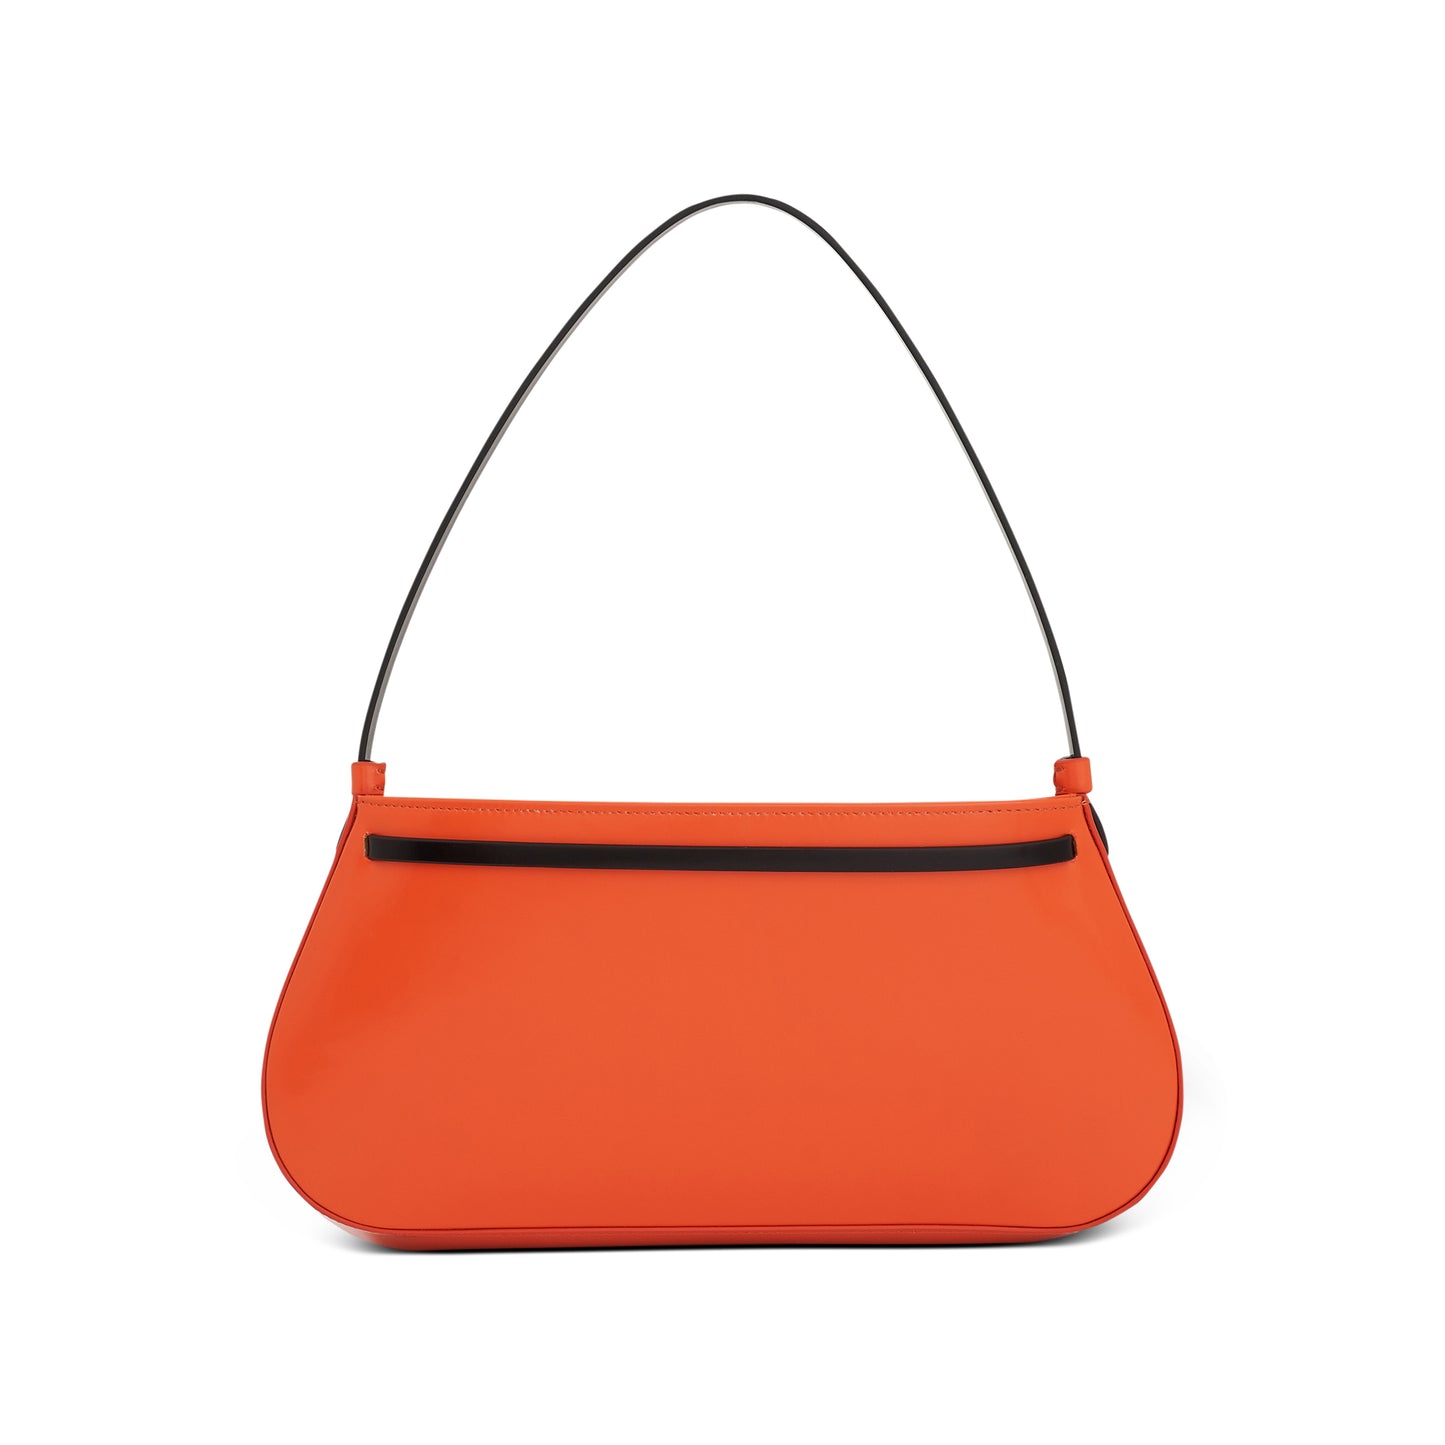 Zeta Baguette Bag in Orange